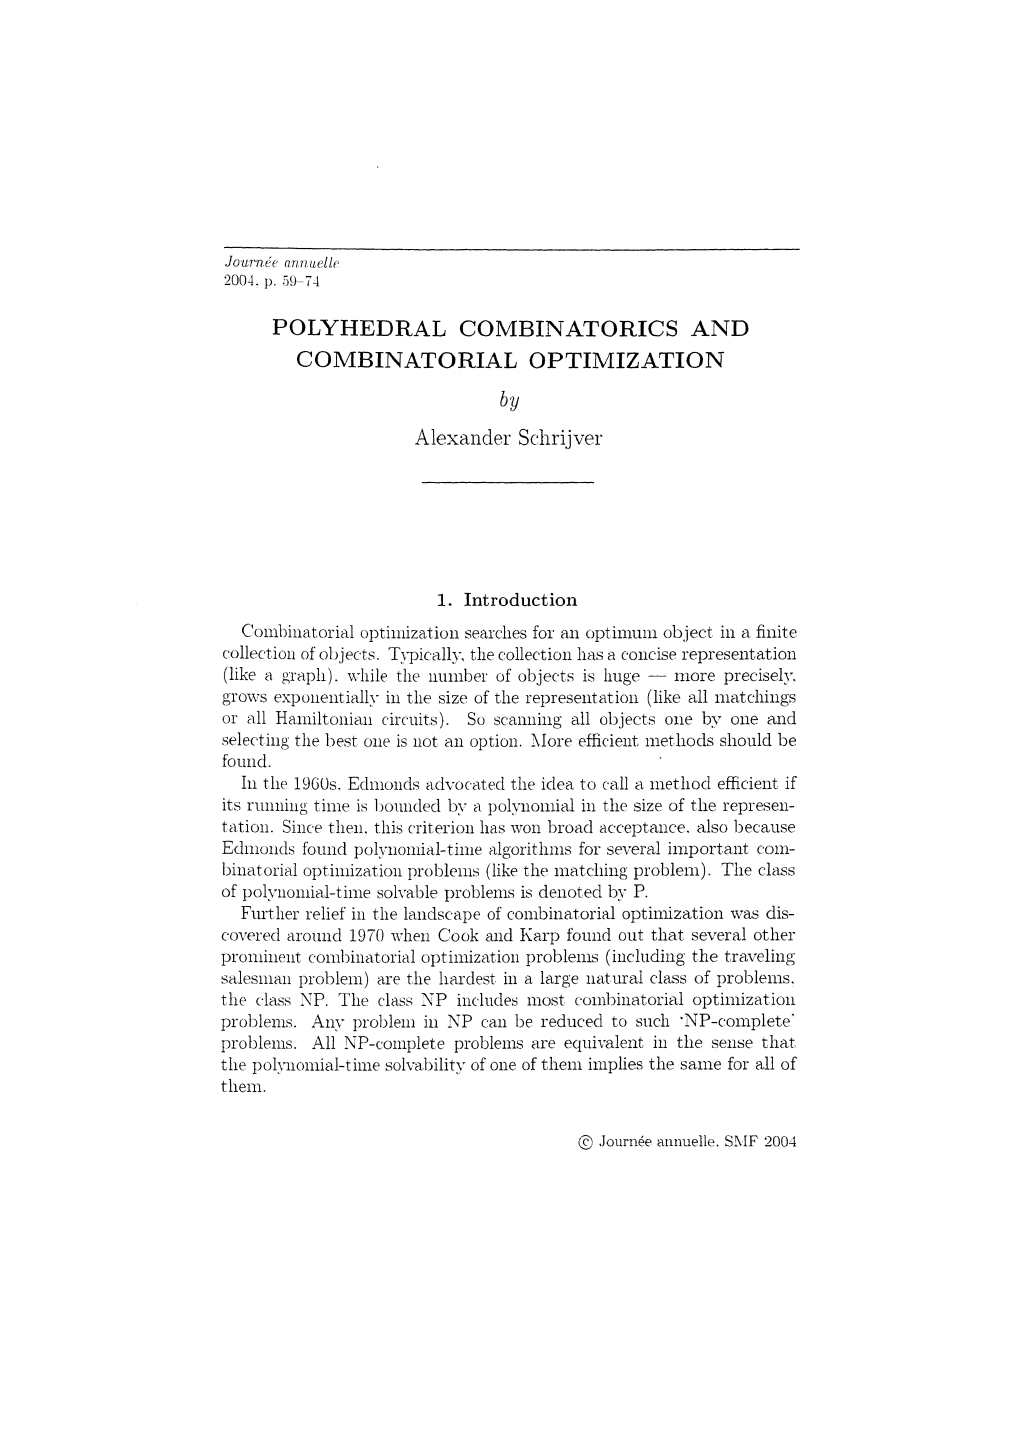 POLYHEDRAL COMBINATORICS and COMBINATORIAL OPTIMIZATION by Alexander Schrijver